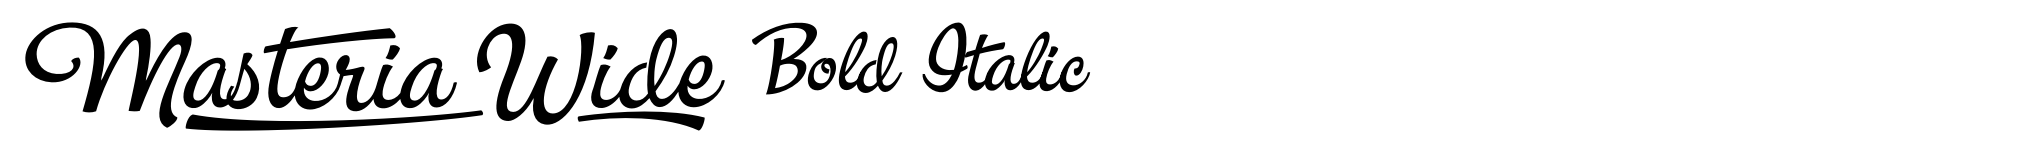 Masteria Wide Bold Italic image